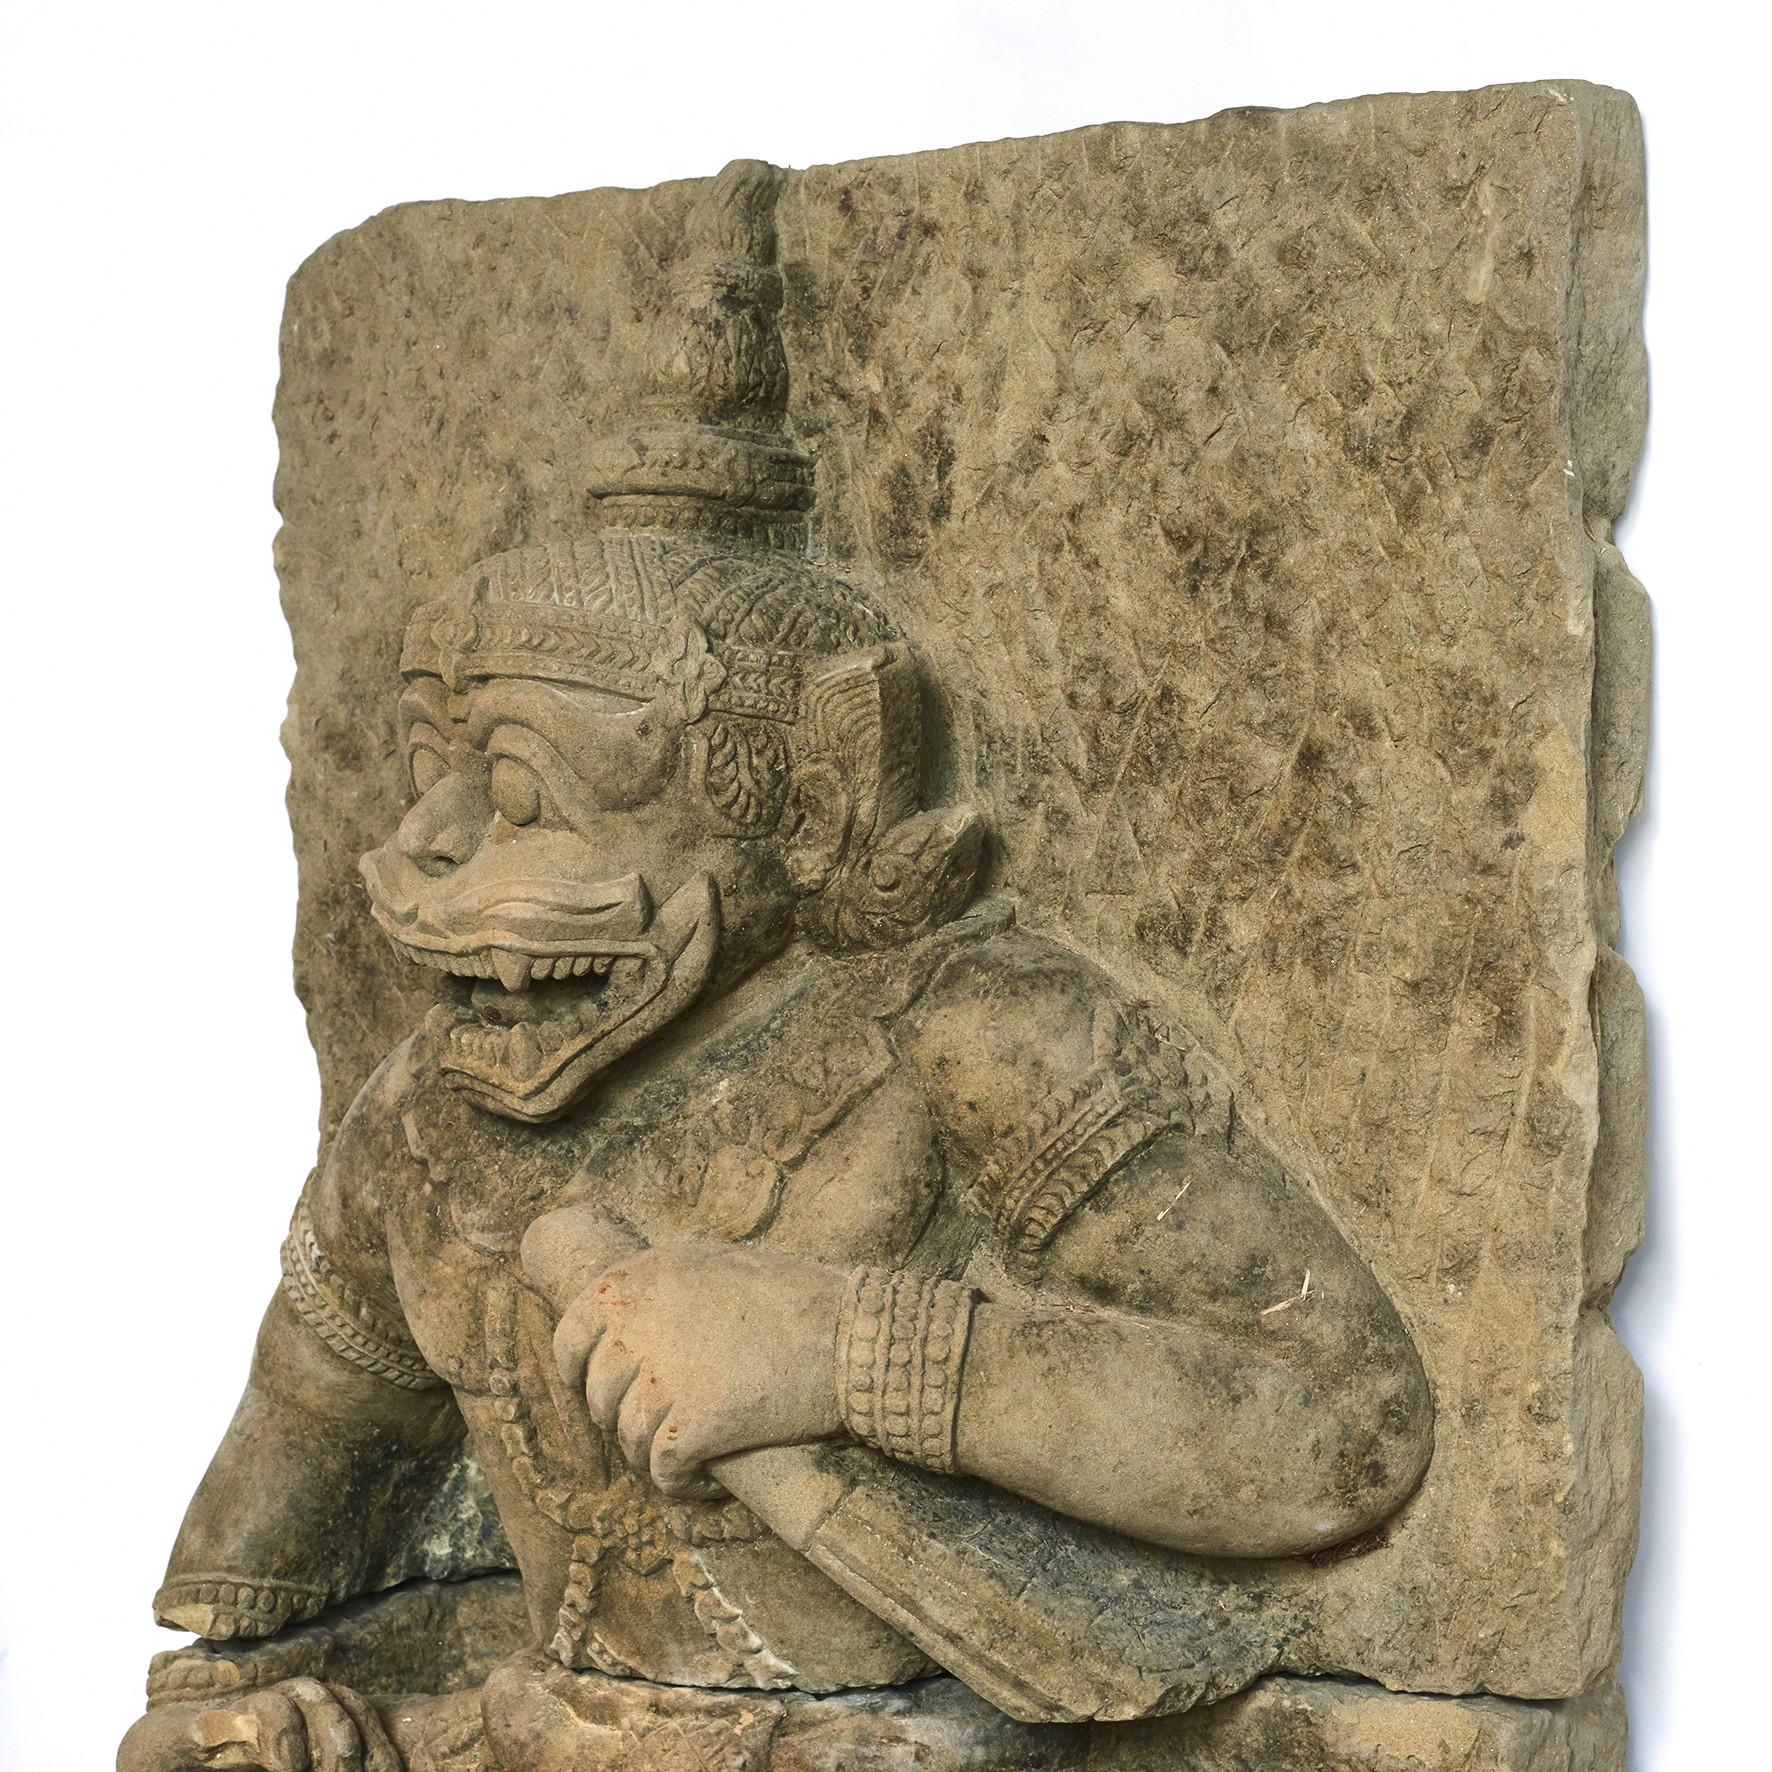 Hand-Carved 500-600 Year-Old Sandstone Sculpture of Hanuman, The Monkey God